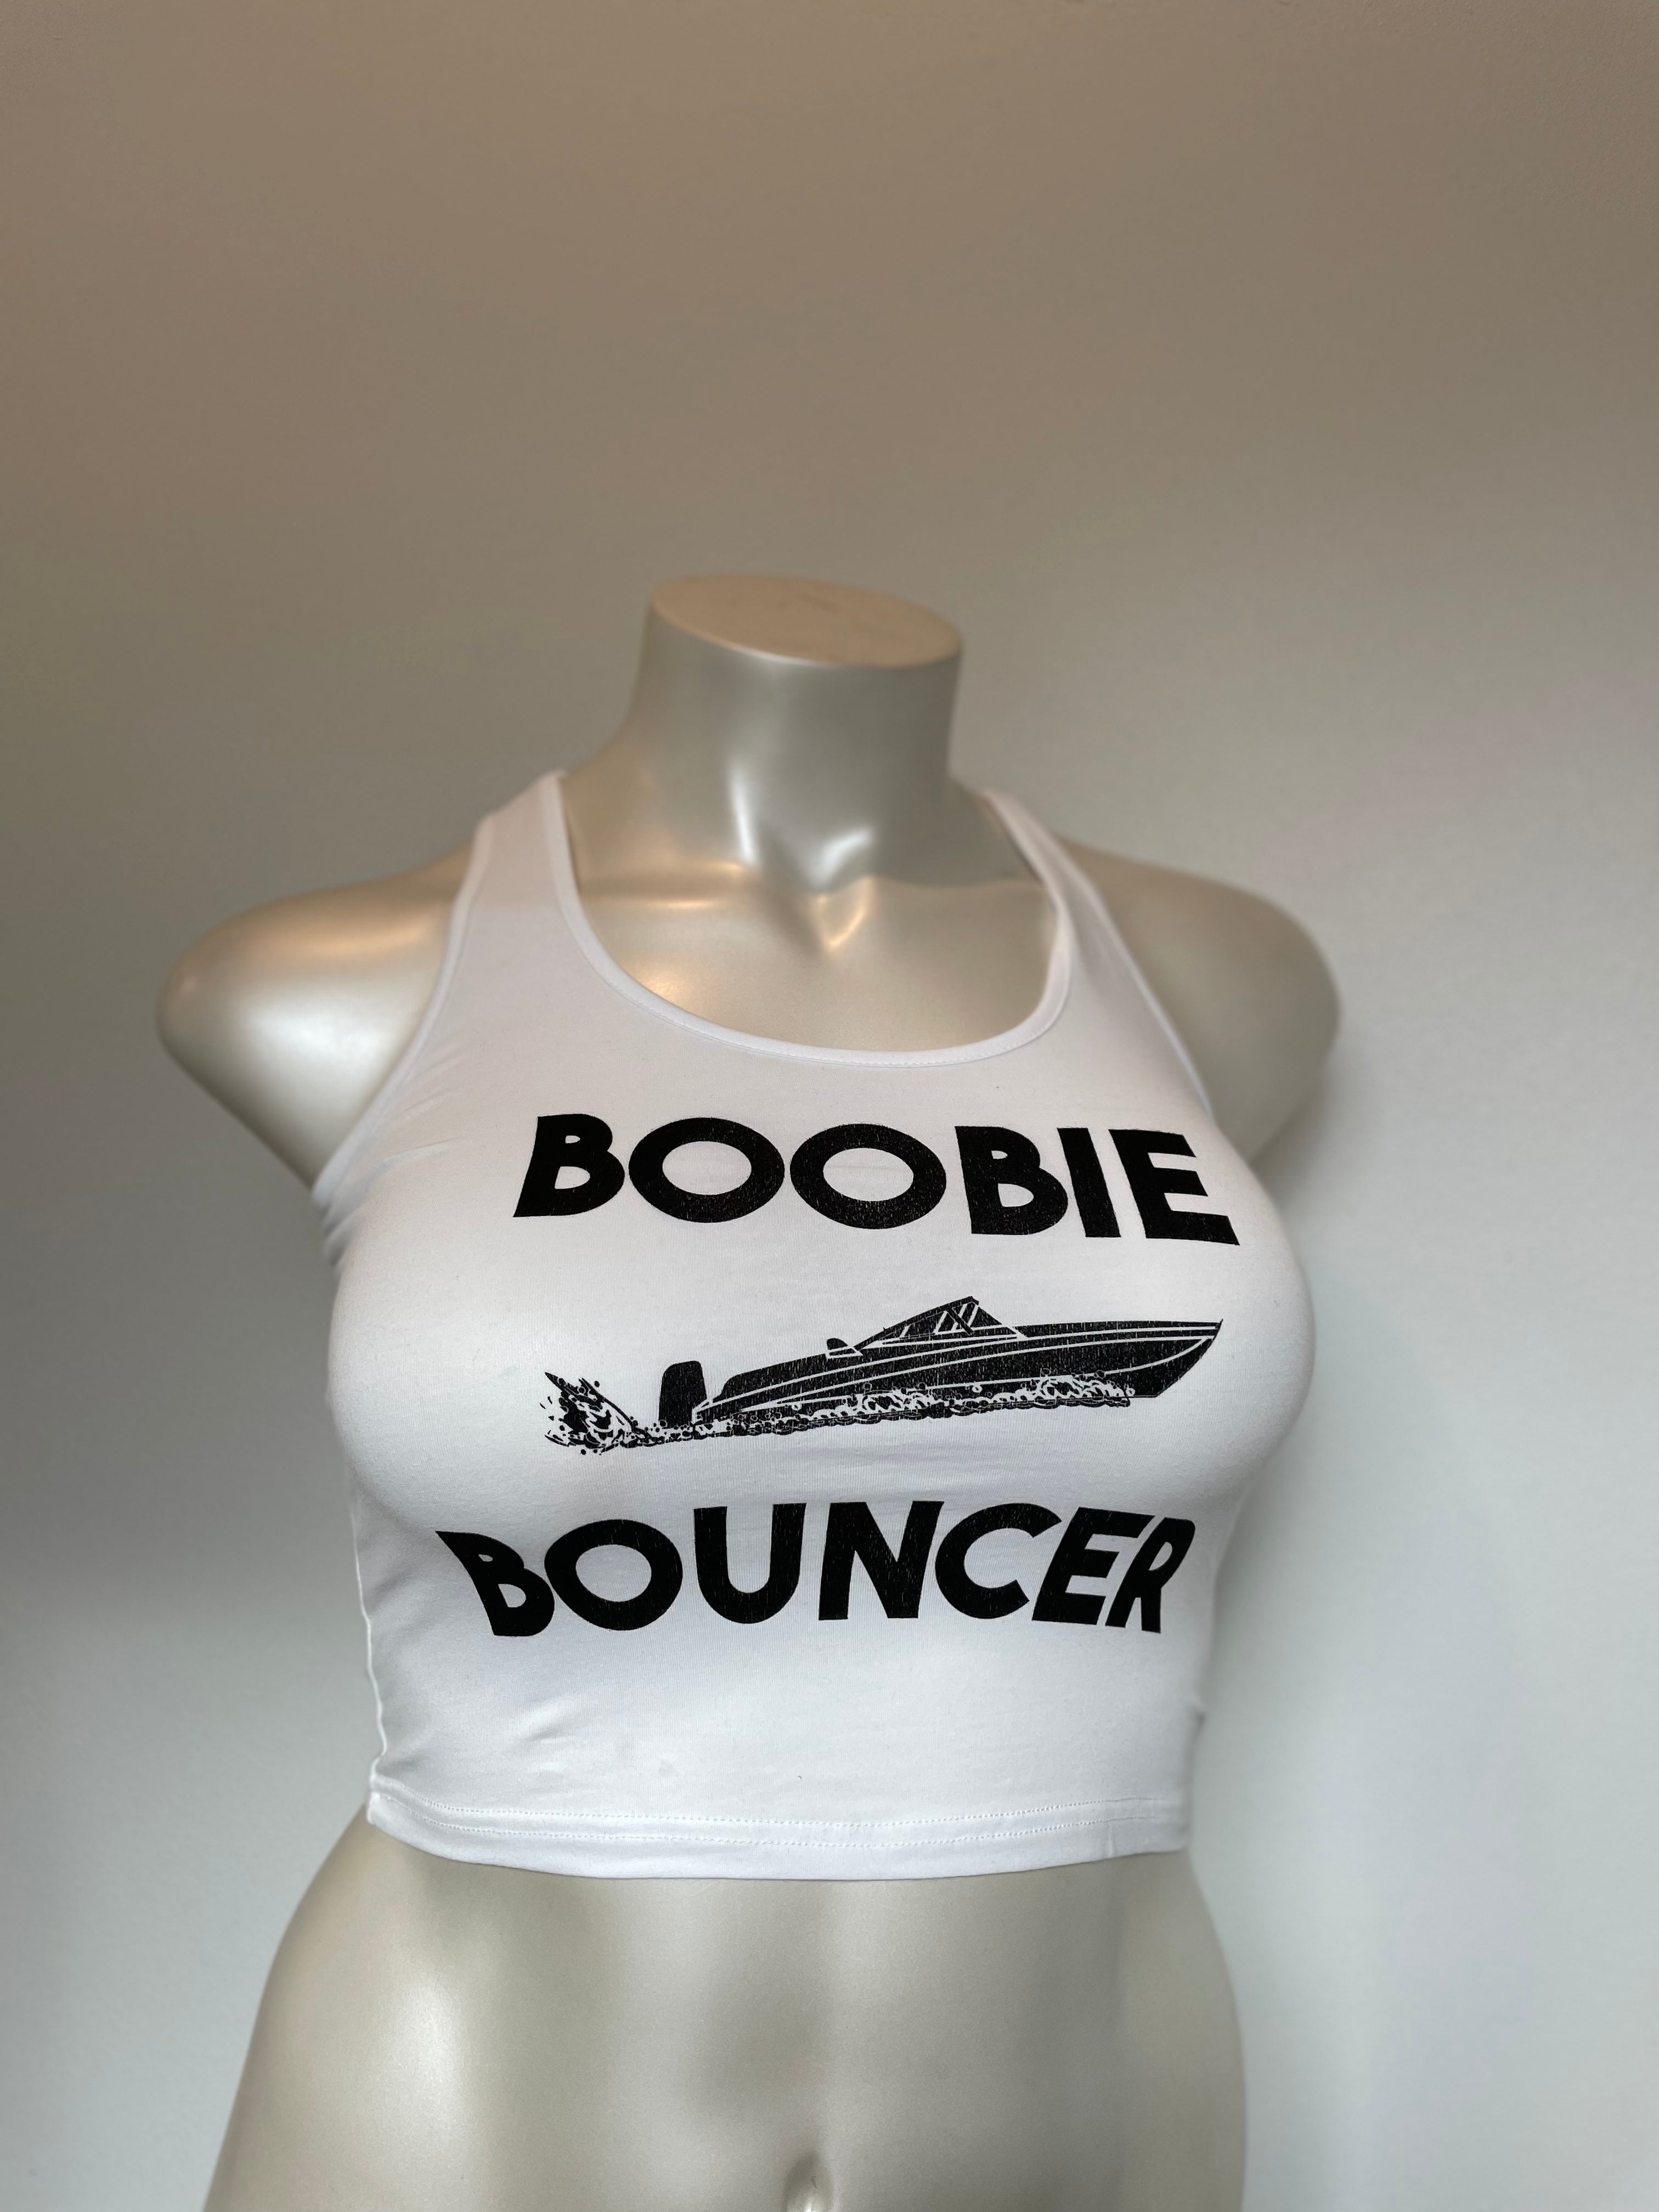 Boobie Bouncer // Crop